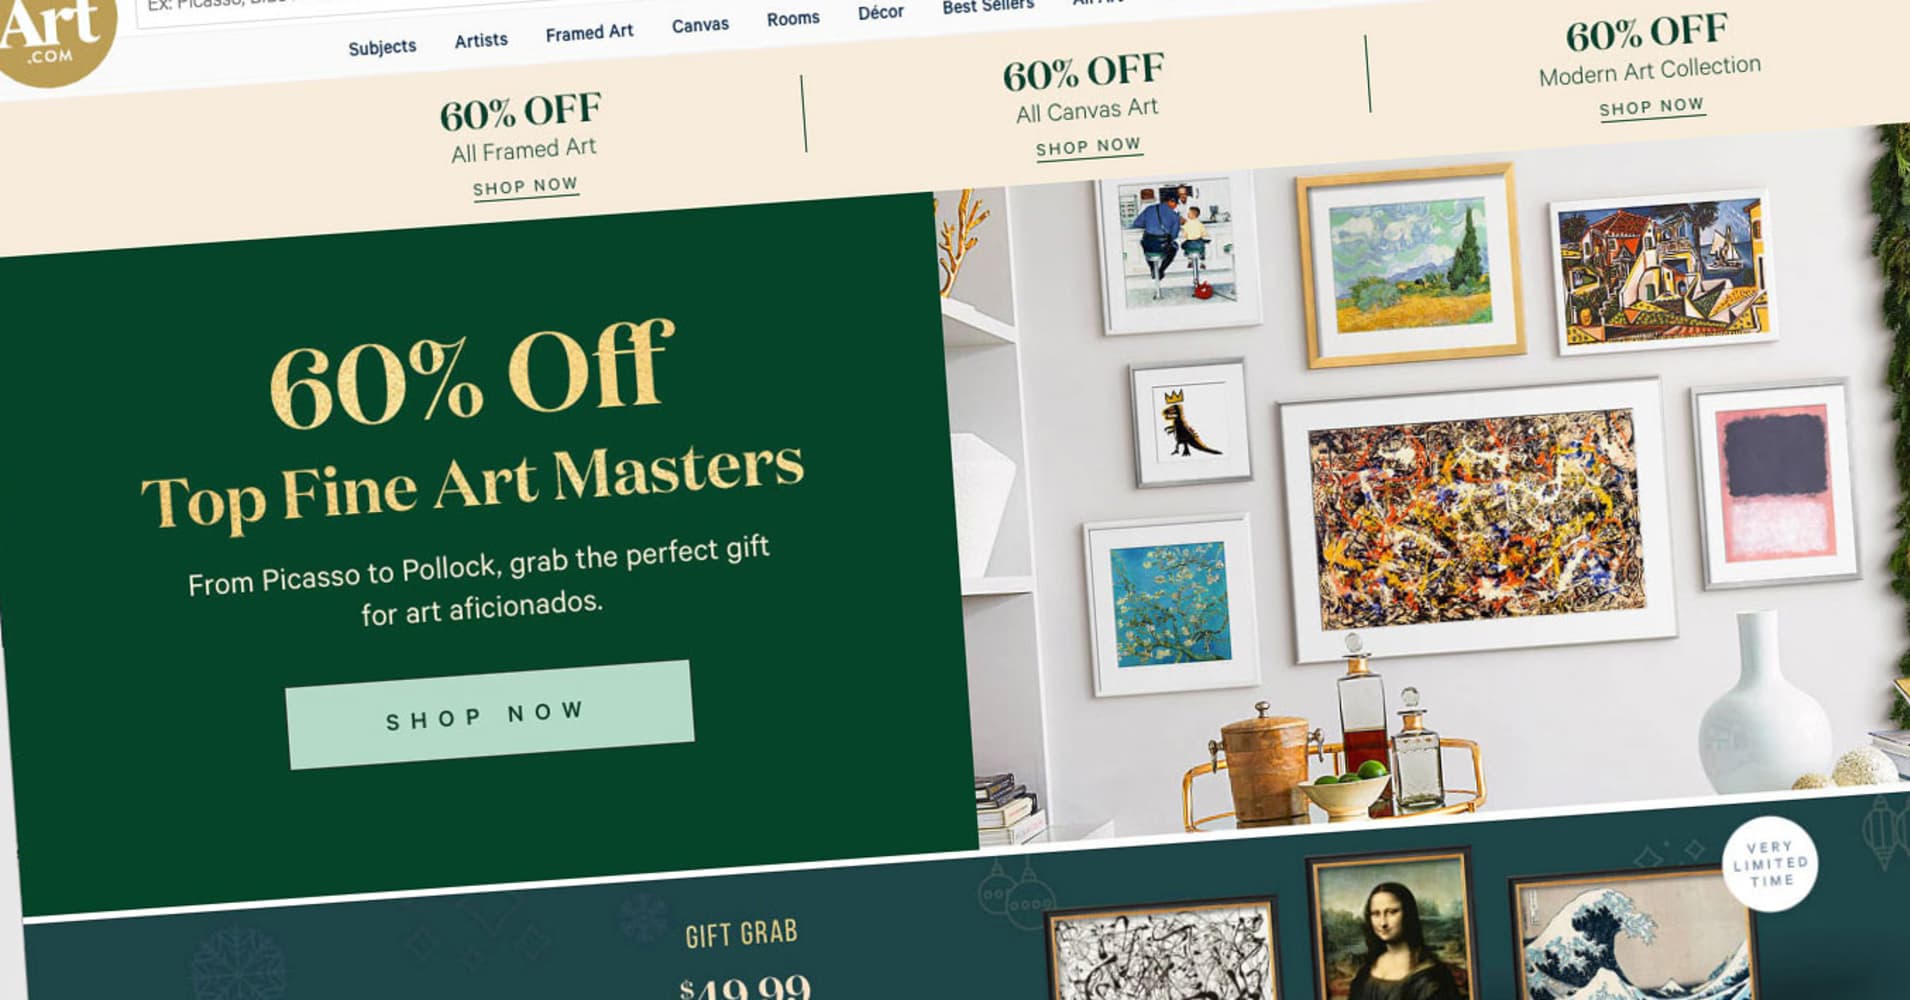 walmart to acquire online home decor retailer art